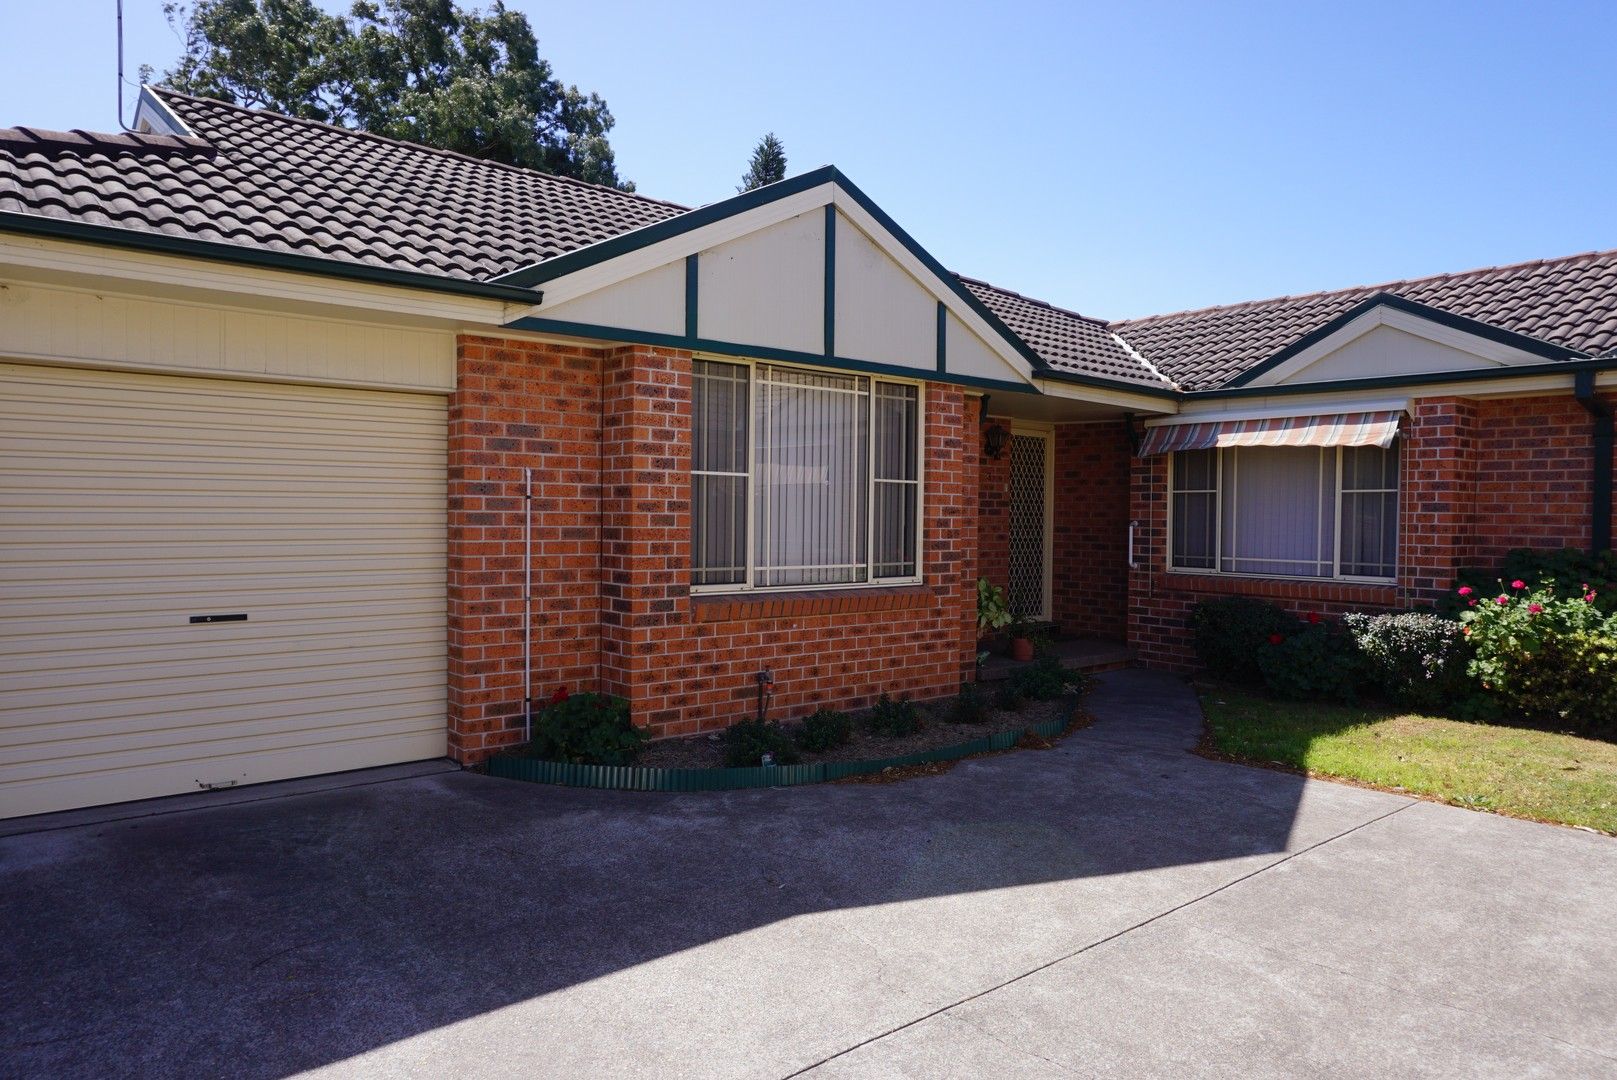 3 bedrooms Apartment / Unit / Flat in 3/5 Boundary SINGLETON NSW, 2330